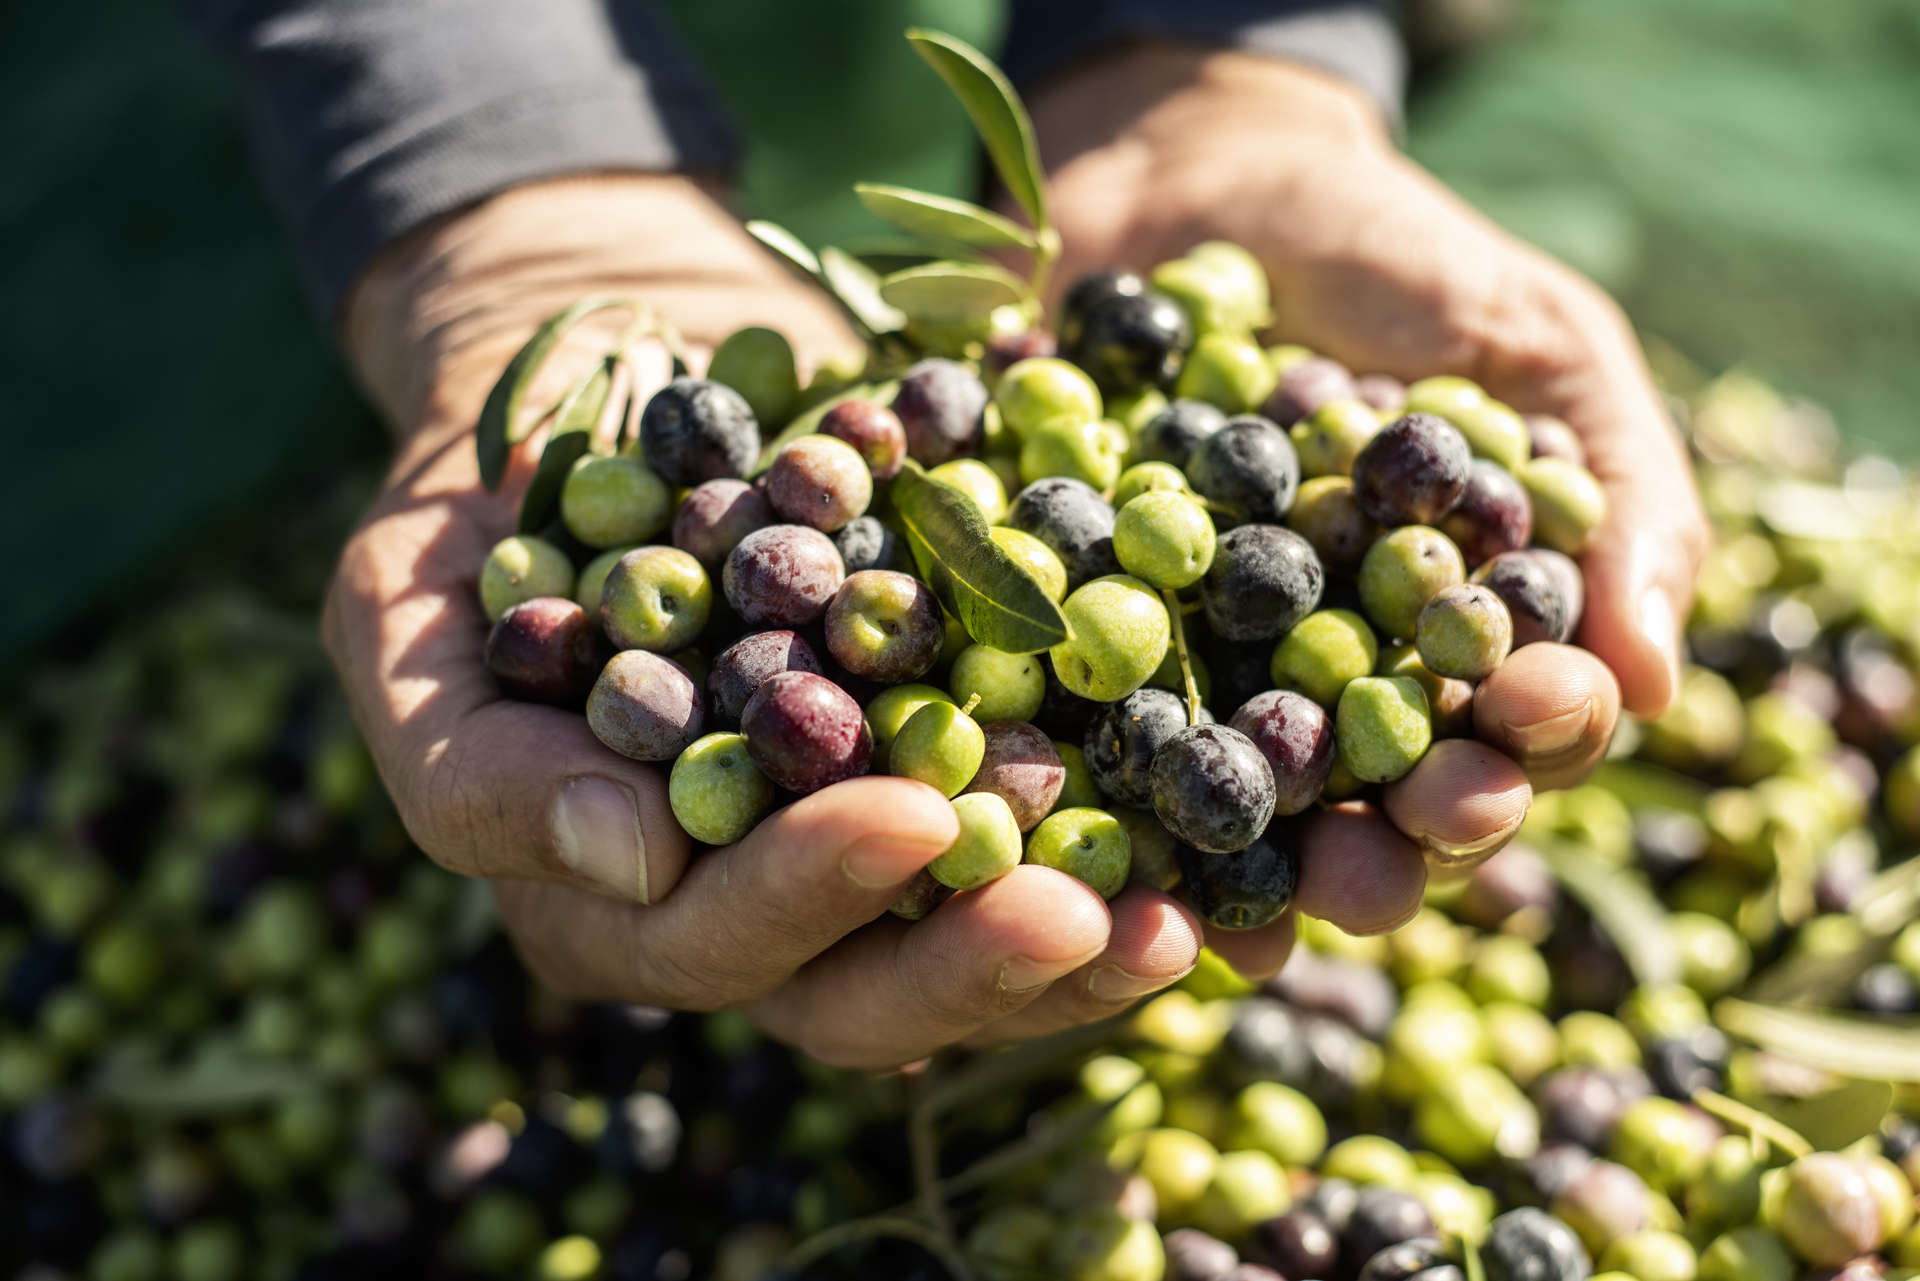 Hands full of olives